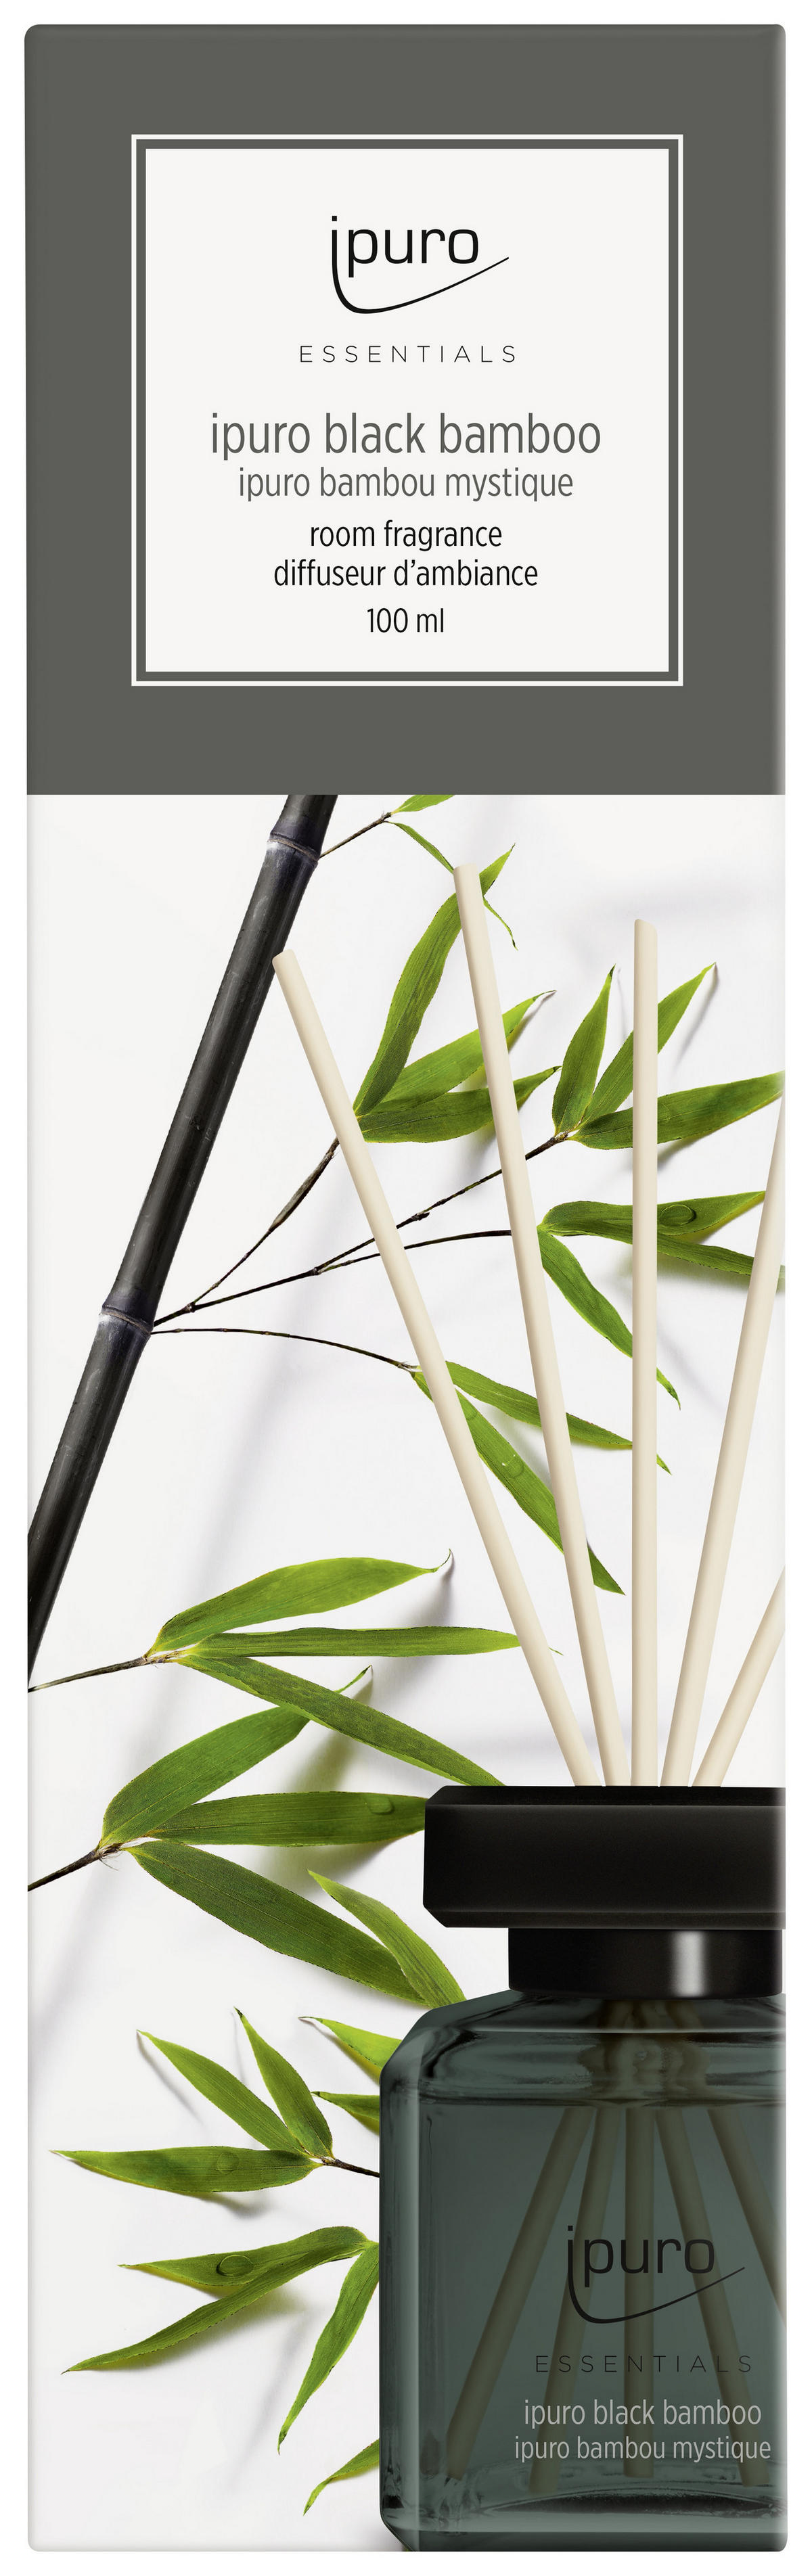 Ipuro Essentials Raumduft Scented Stick Set (Black Bamboo, Black